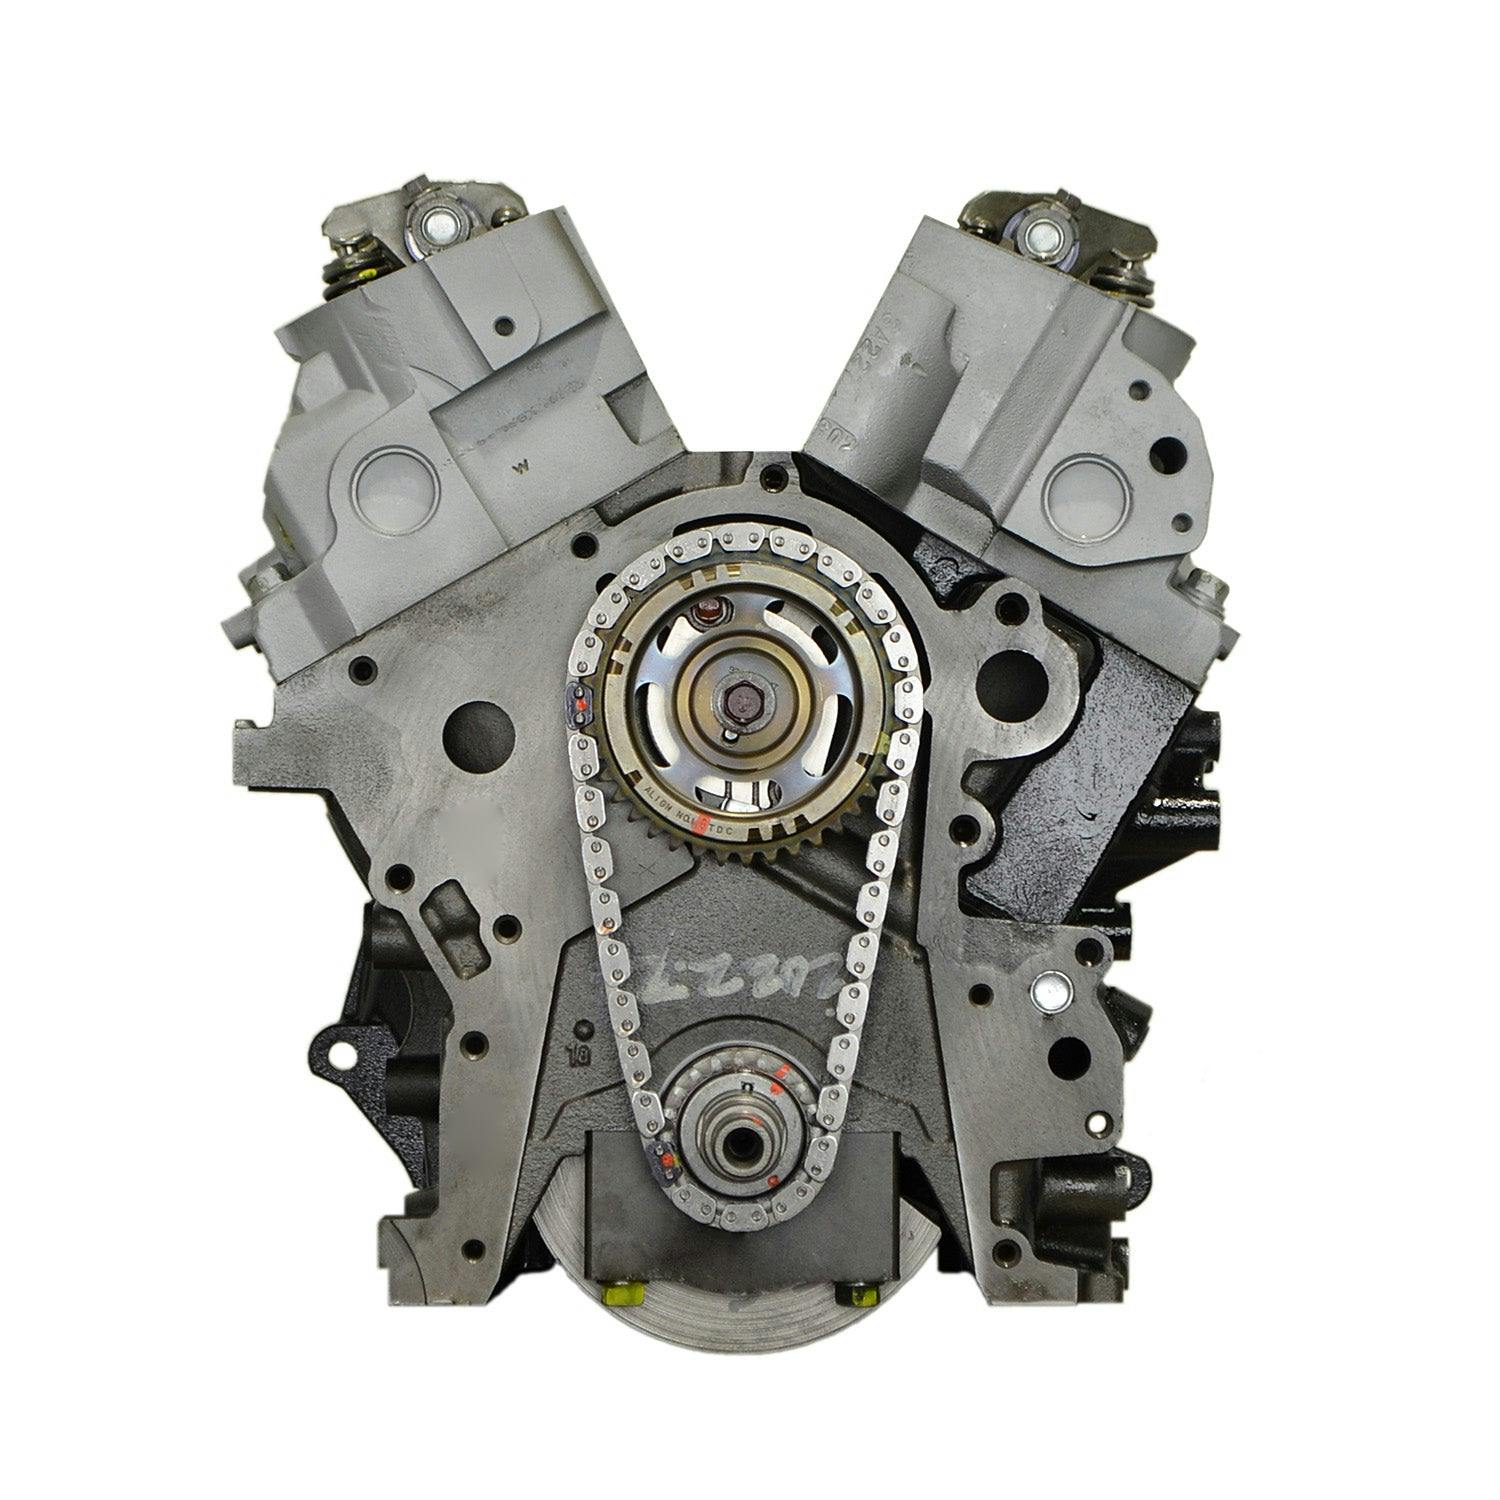 3.3L V6 Engine for 2007-2010 Chrysler Town & Country/Dodge Caravan, Grand Caravan